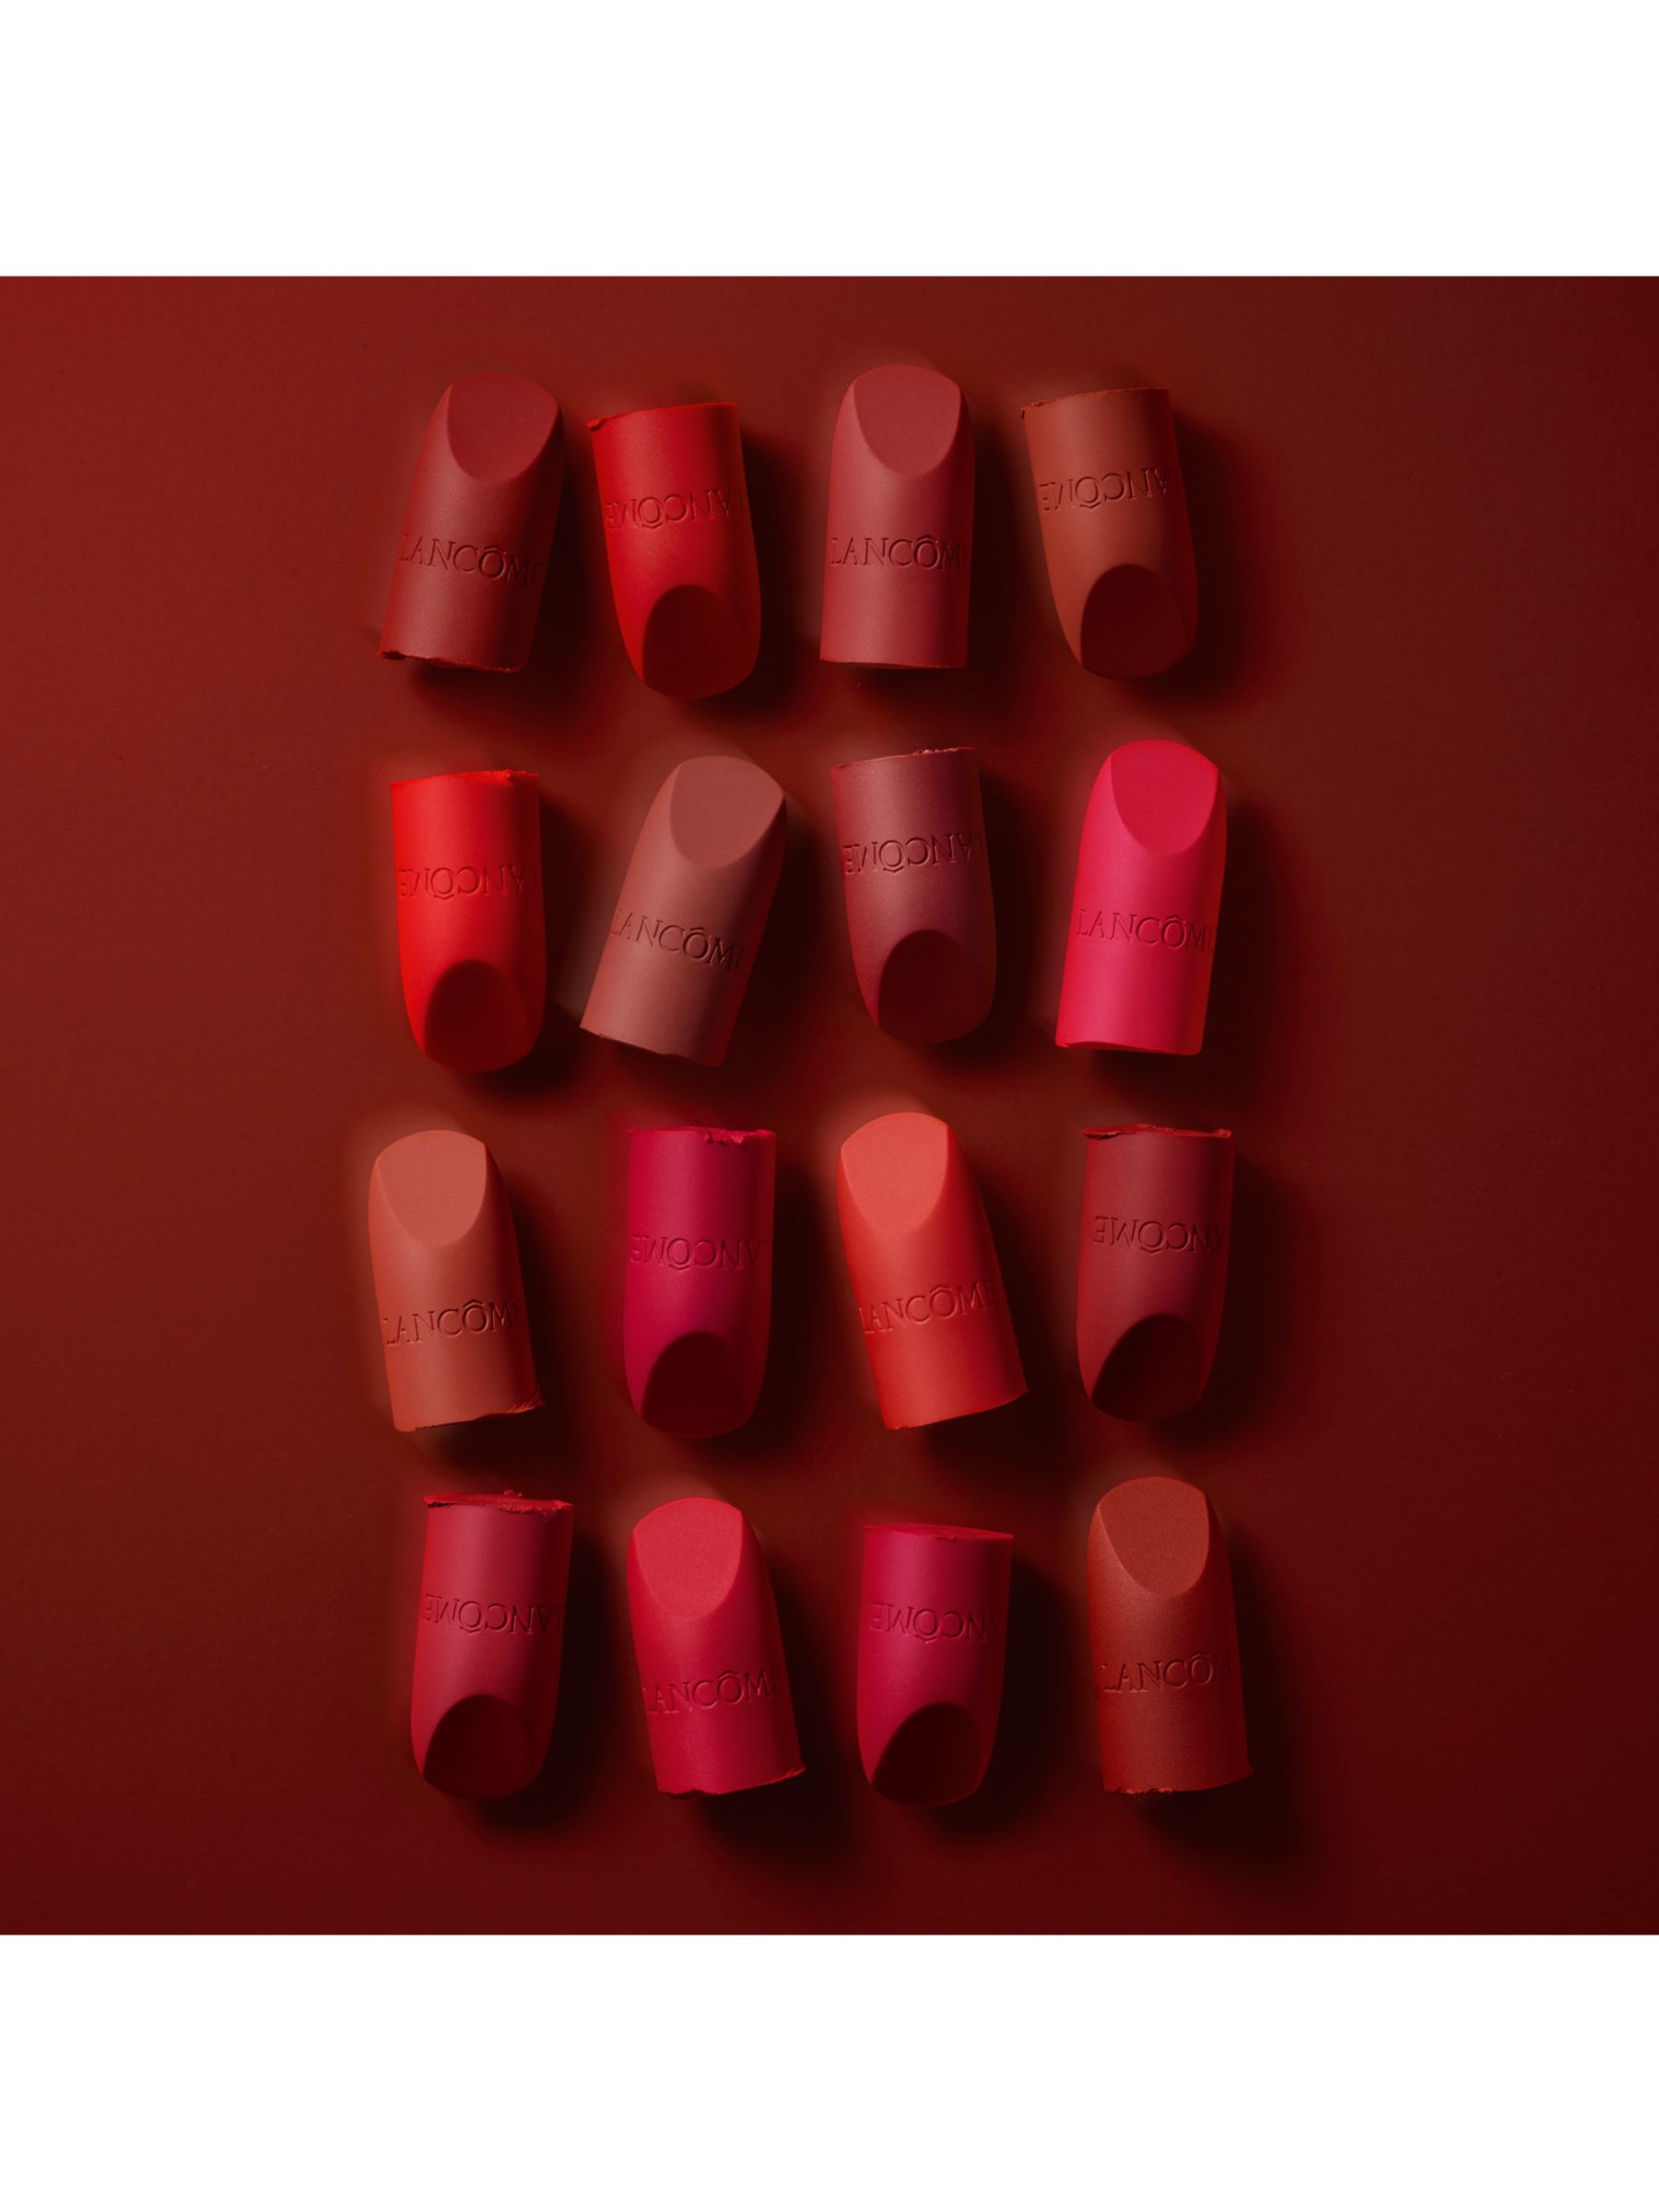 Lancôme L'Absolu Rouge Intimatte Lipstick, 299 French Cashmere